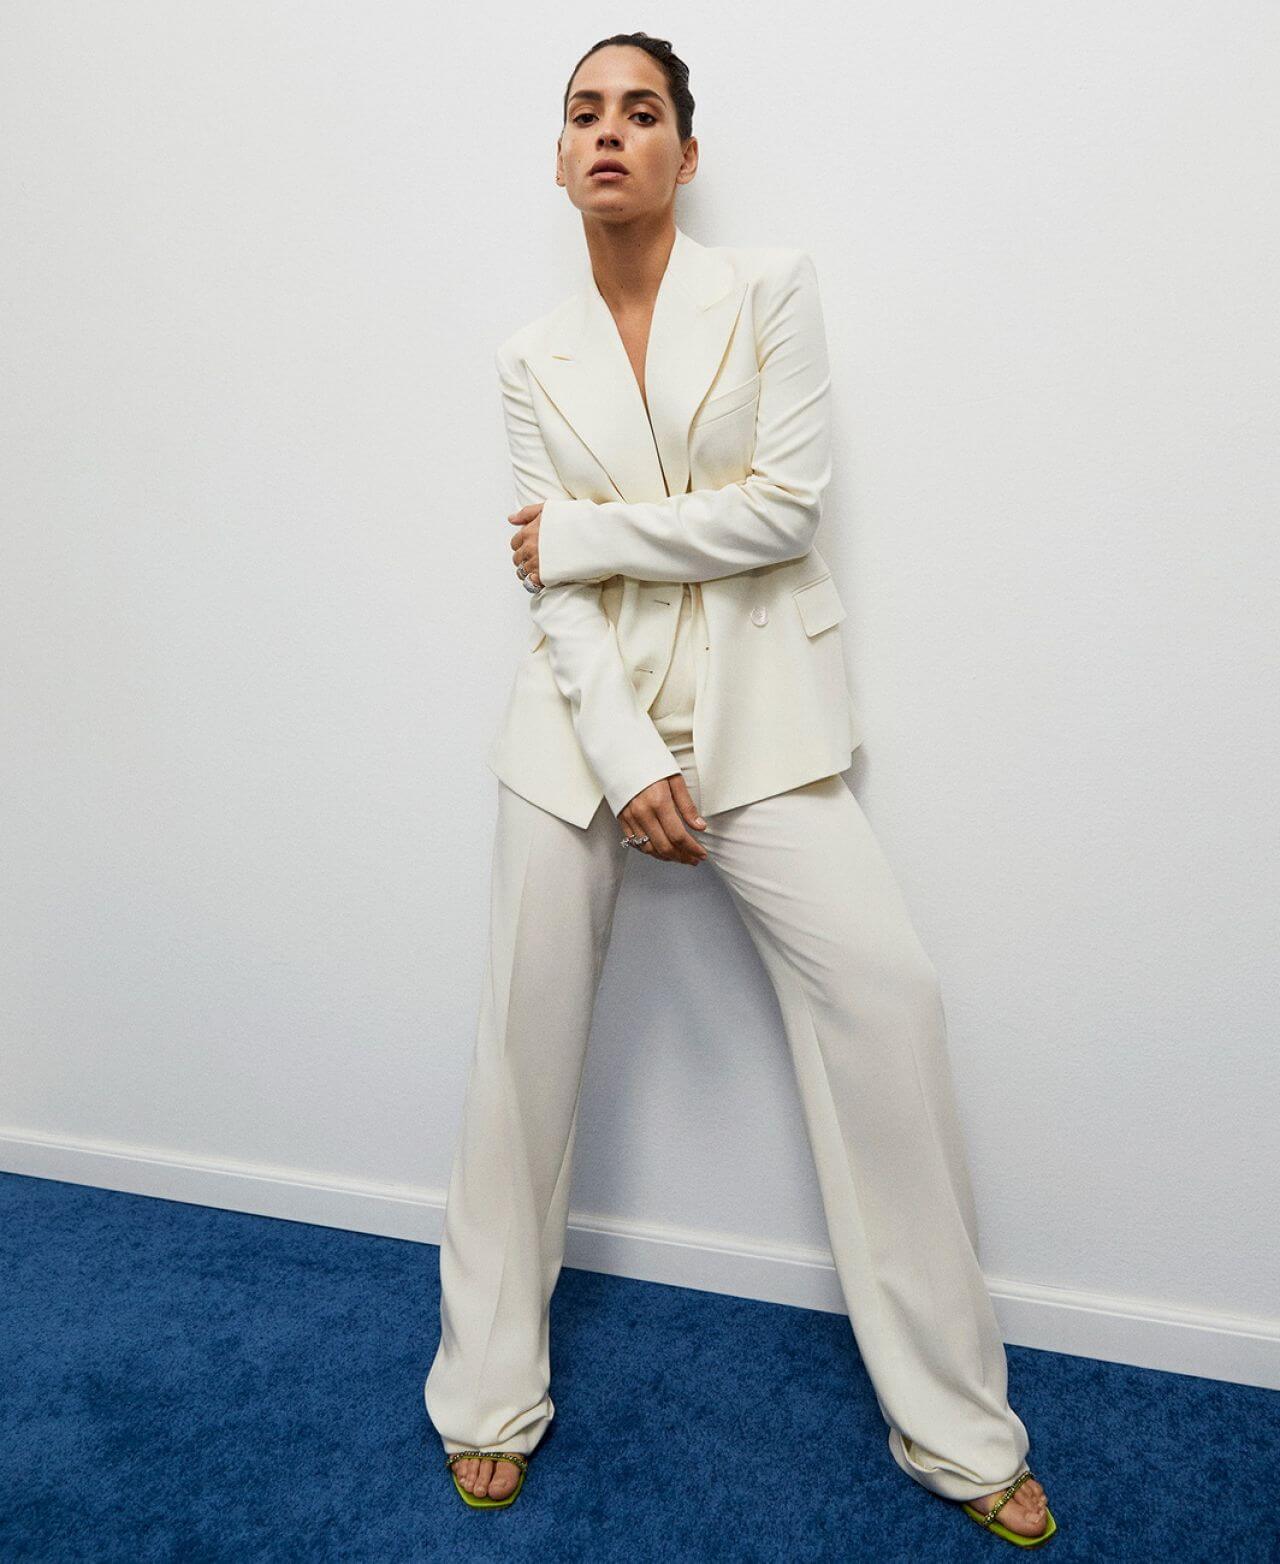 Adria Arjona Classy Look in Off-White Trouser Set